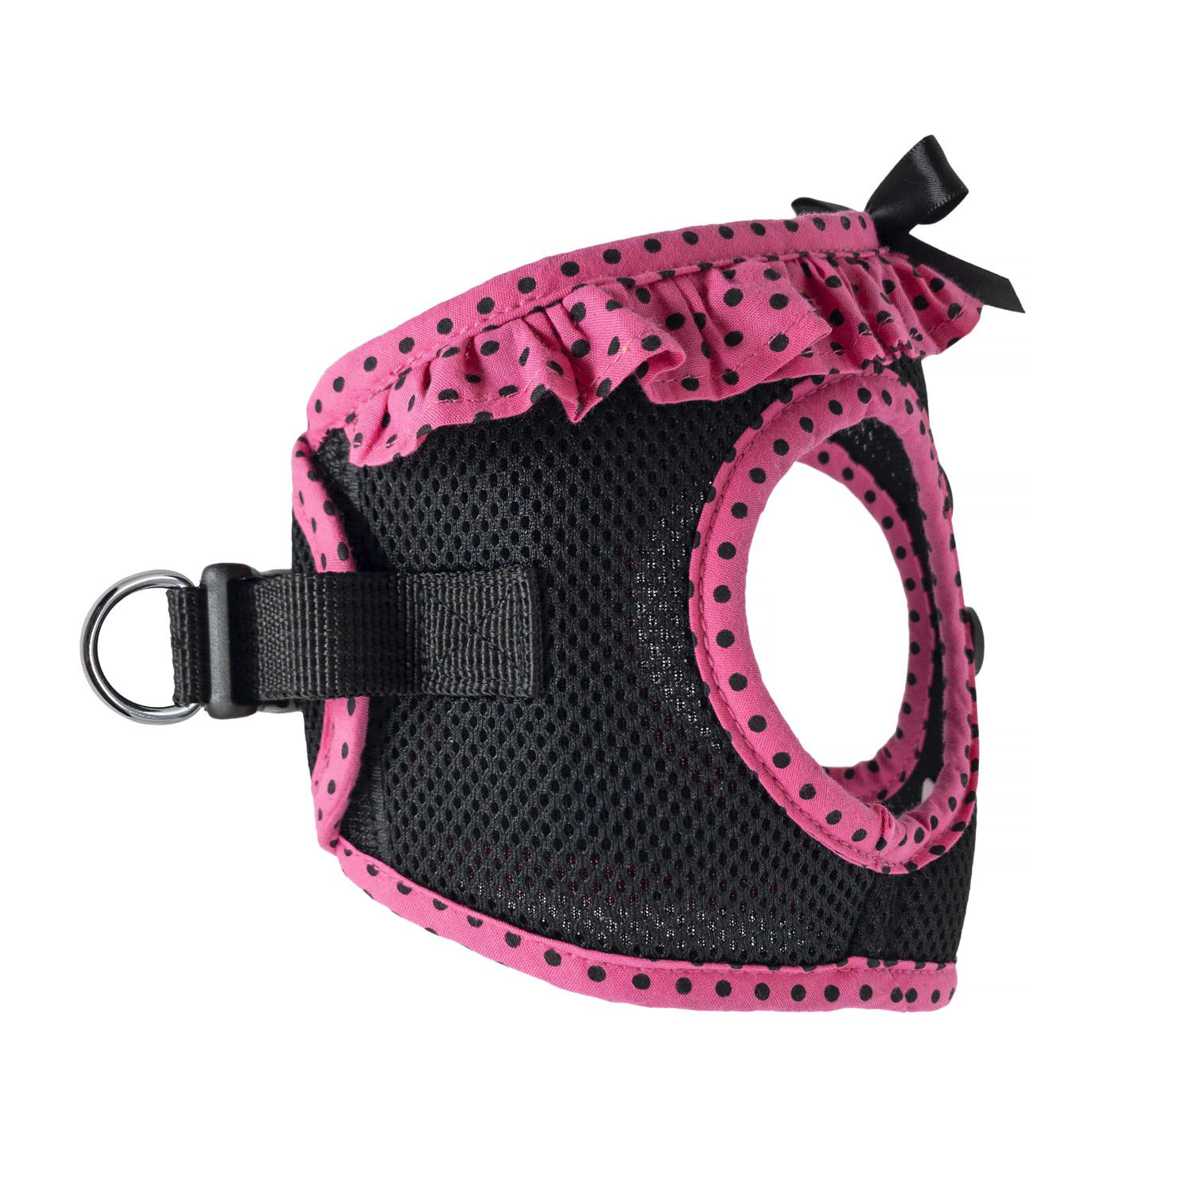 American River Choke Free Dog Harness in Black & Pink Polka Dot | Pawlicious & Company